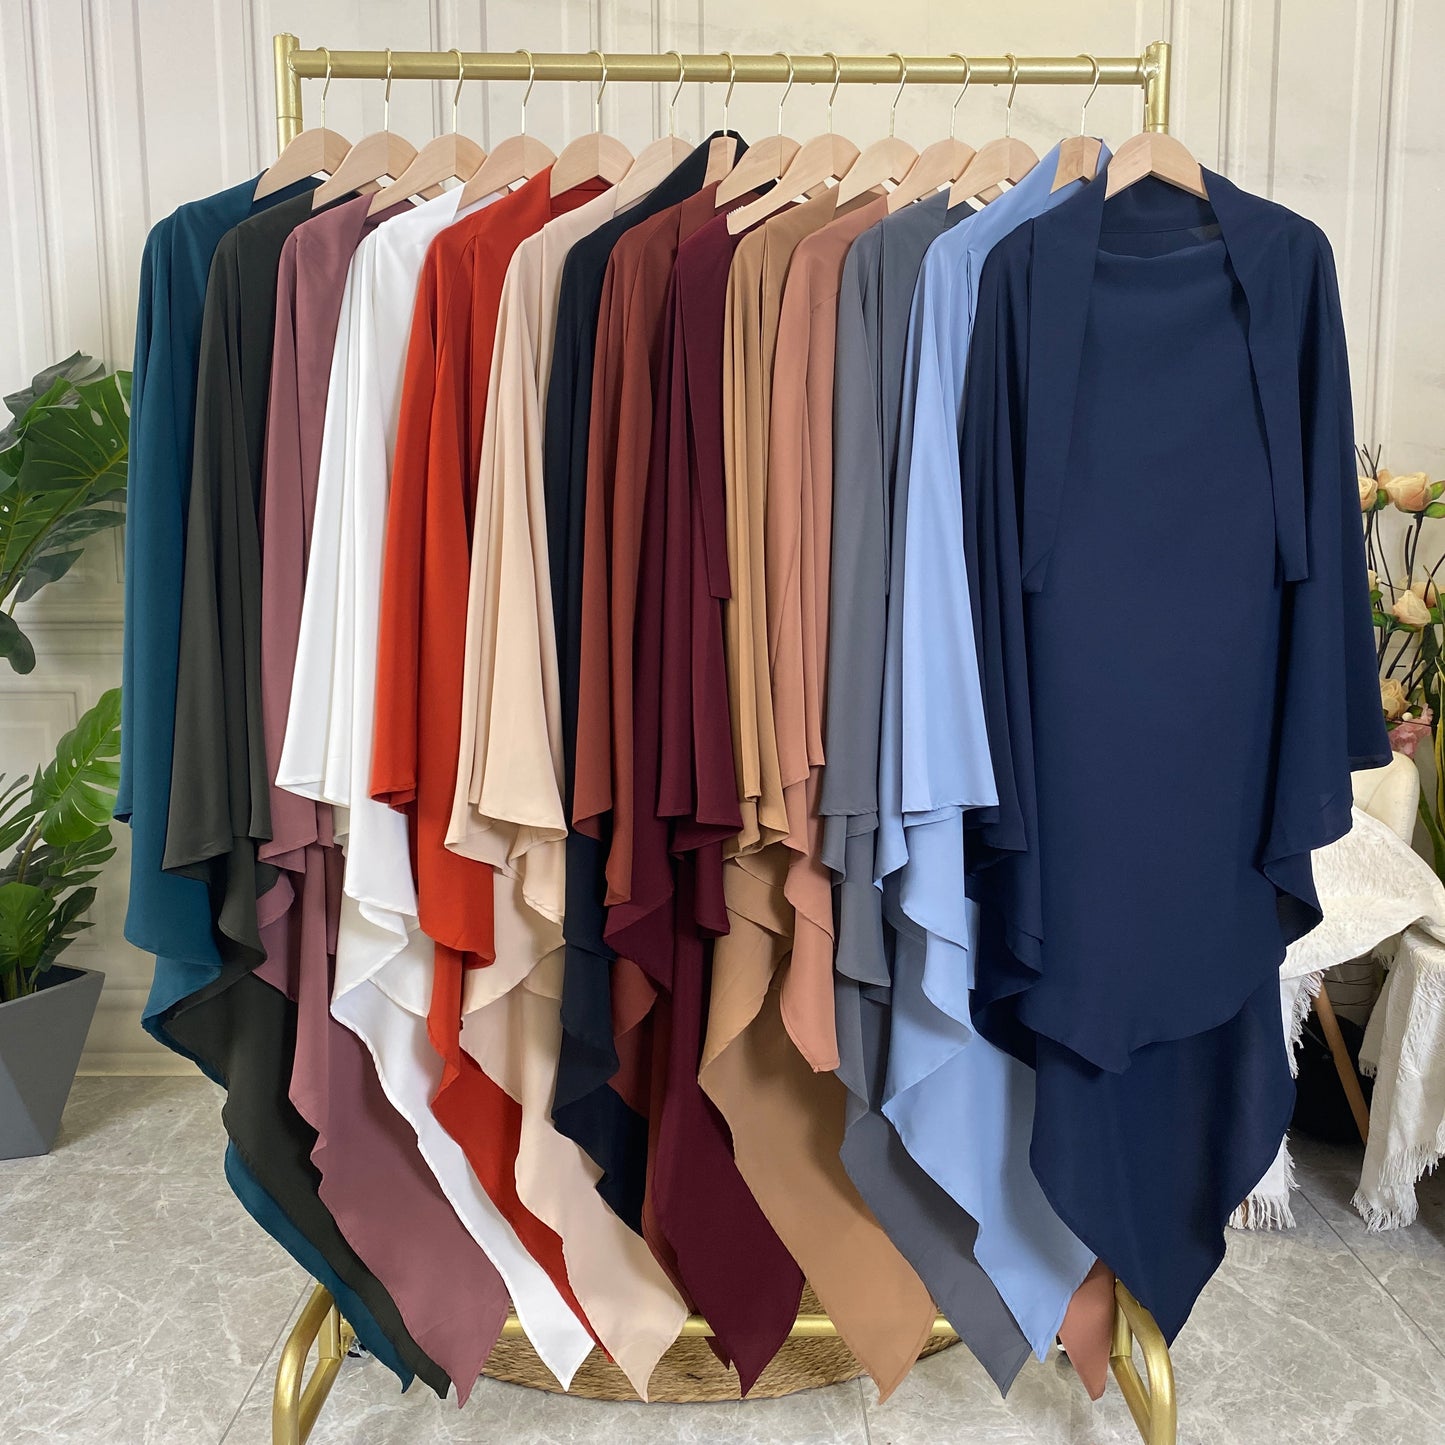 Khimar : Single Layer Triangular Diamond Instant Khimar-Hijab-Jilbab for Girls & Women in Single Layer Light Gray Color | Tie Back Burkha Jilbab Khimar Style Abaya Hijab Niqab Islamic Modest Wear